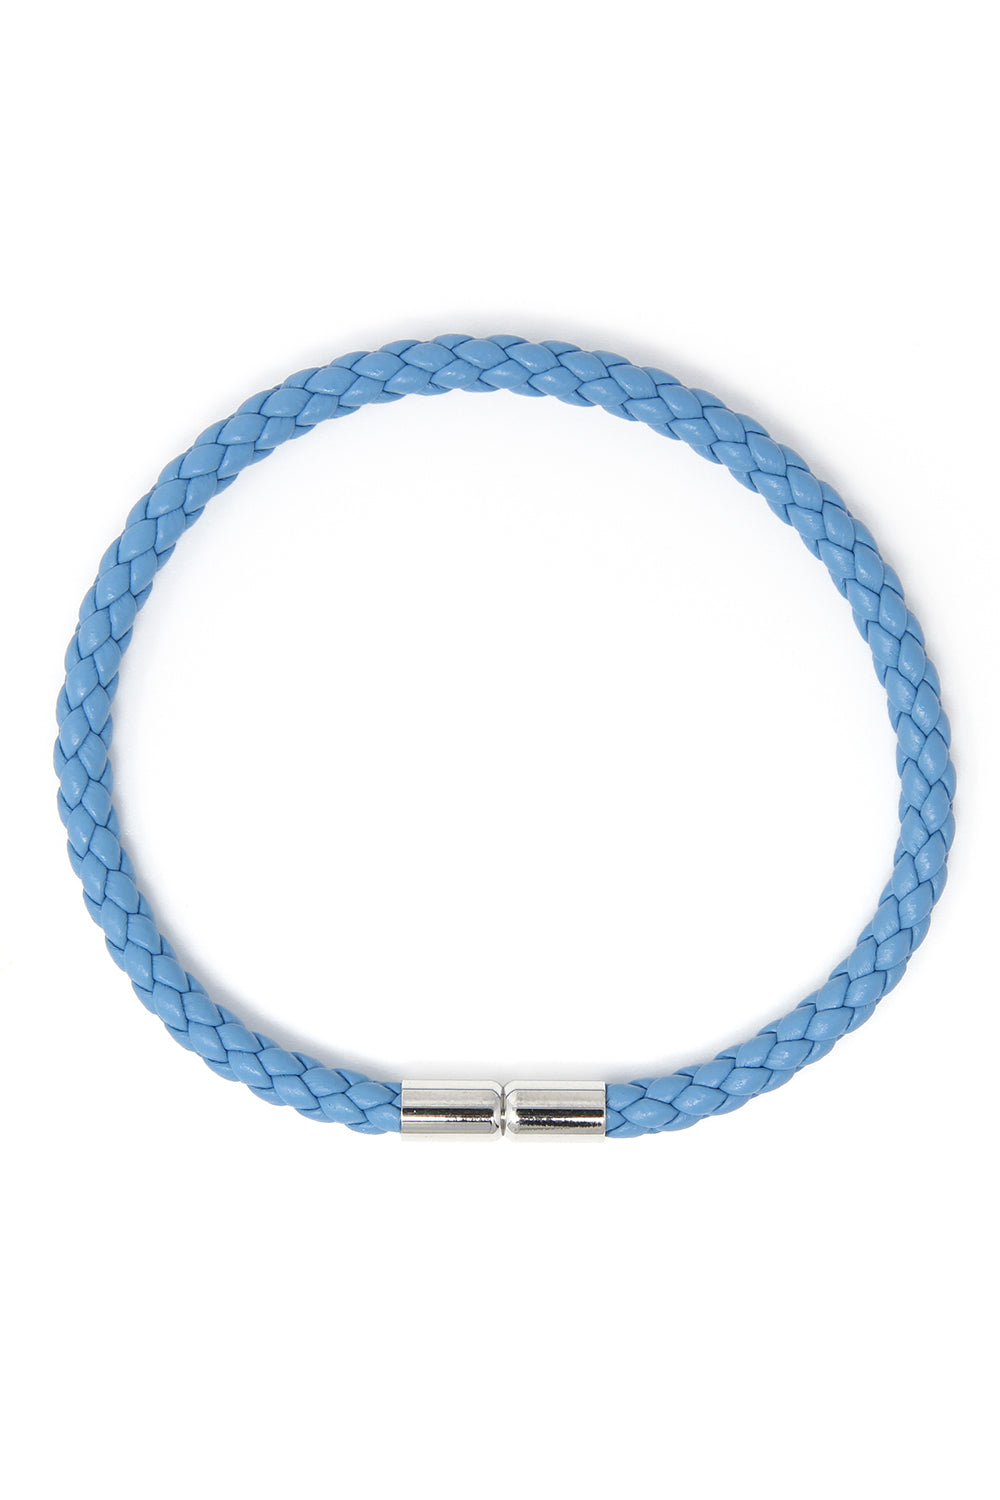 SIDEWALK SALE ITEM - Keva Braided Bracelet - Light Blue